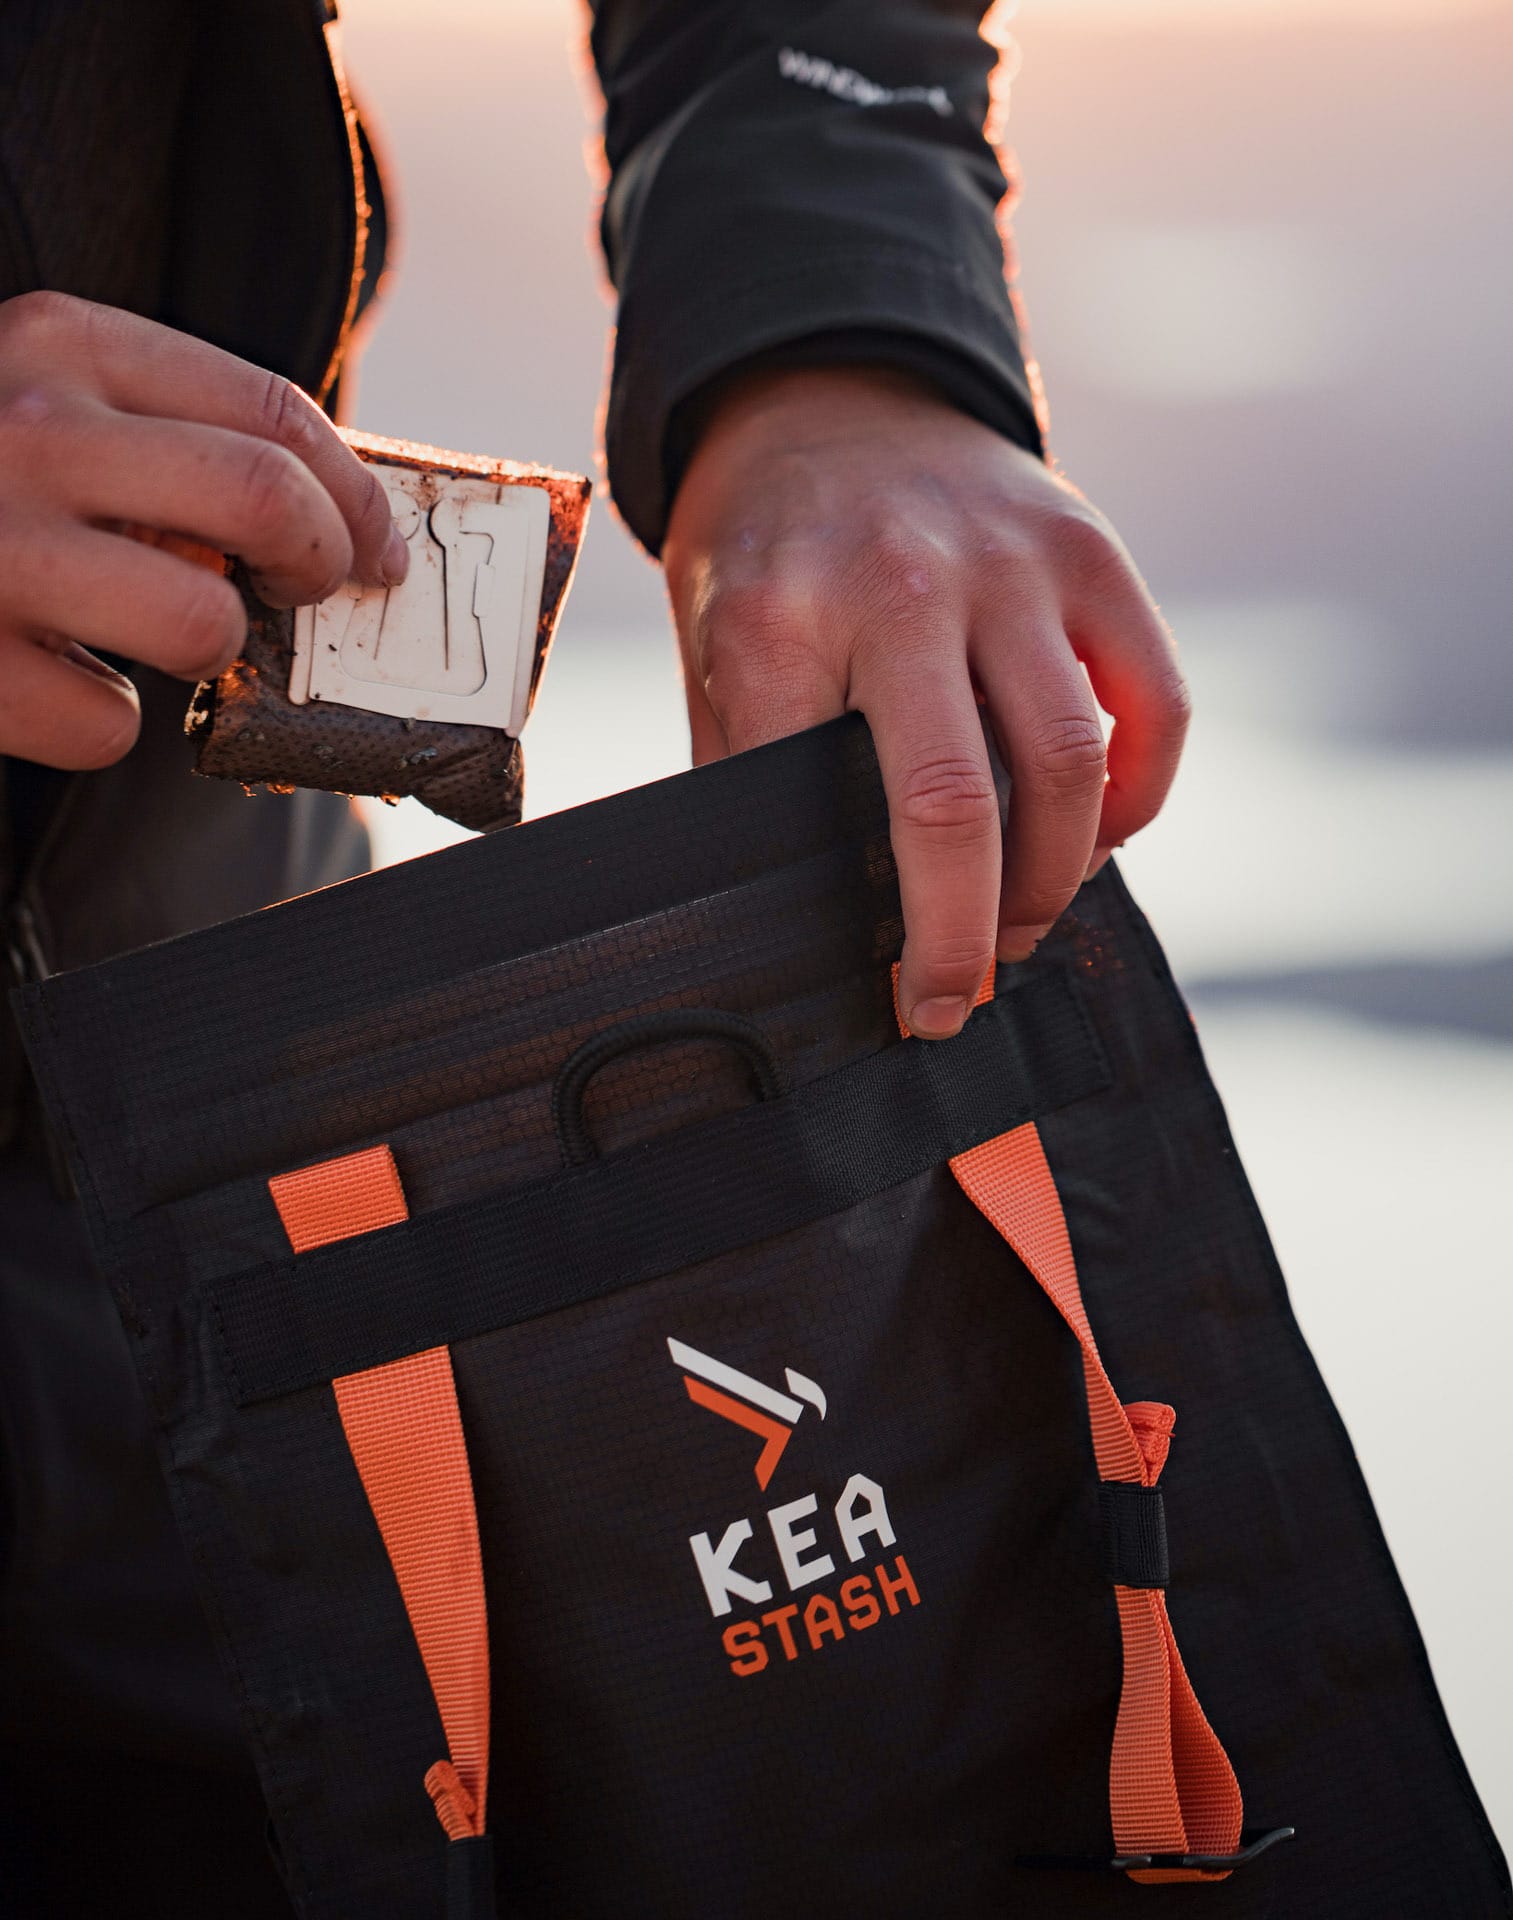 Kea Stash rubbish bag kickstarter, coffee grounds